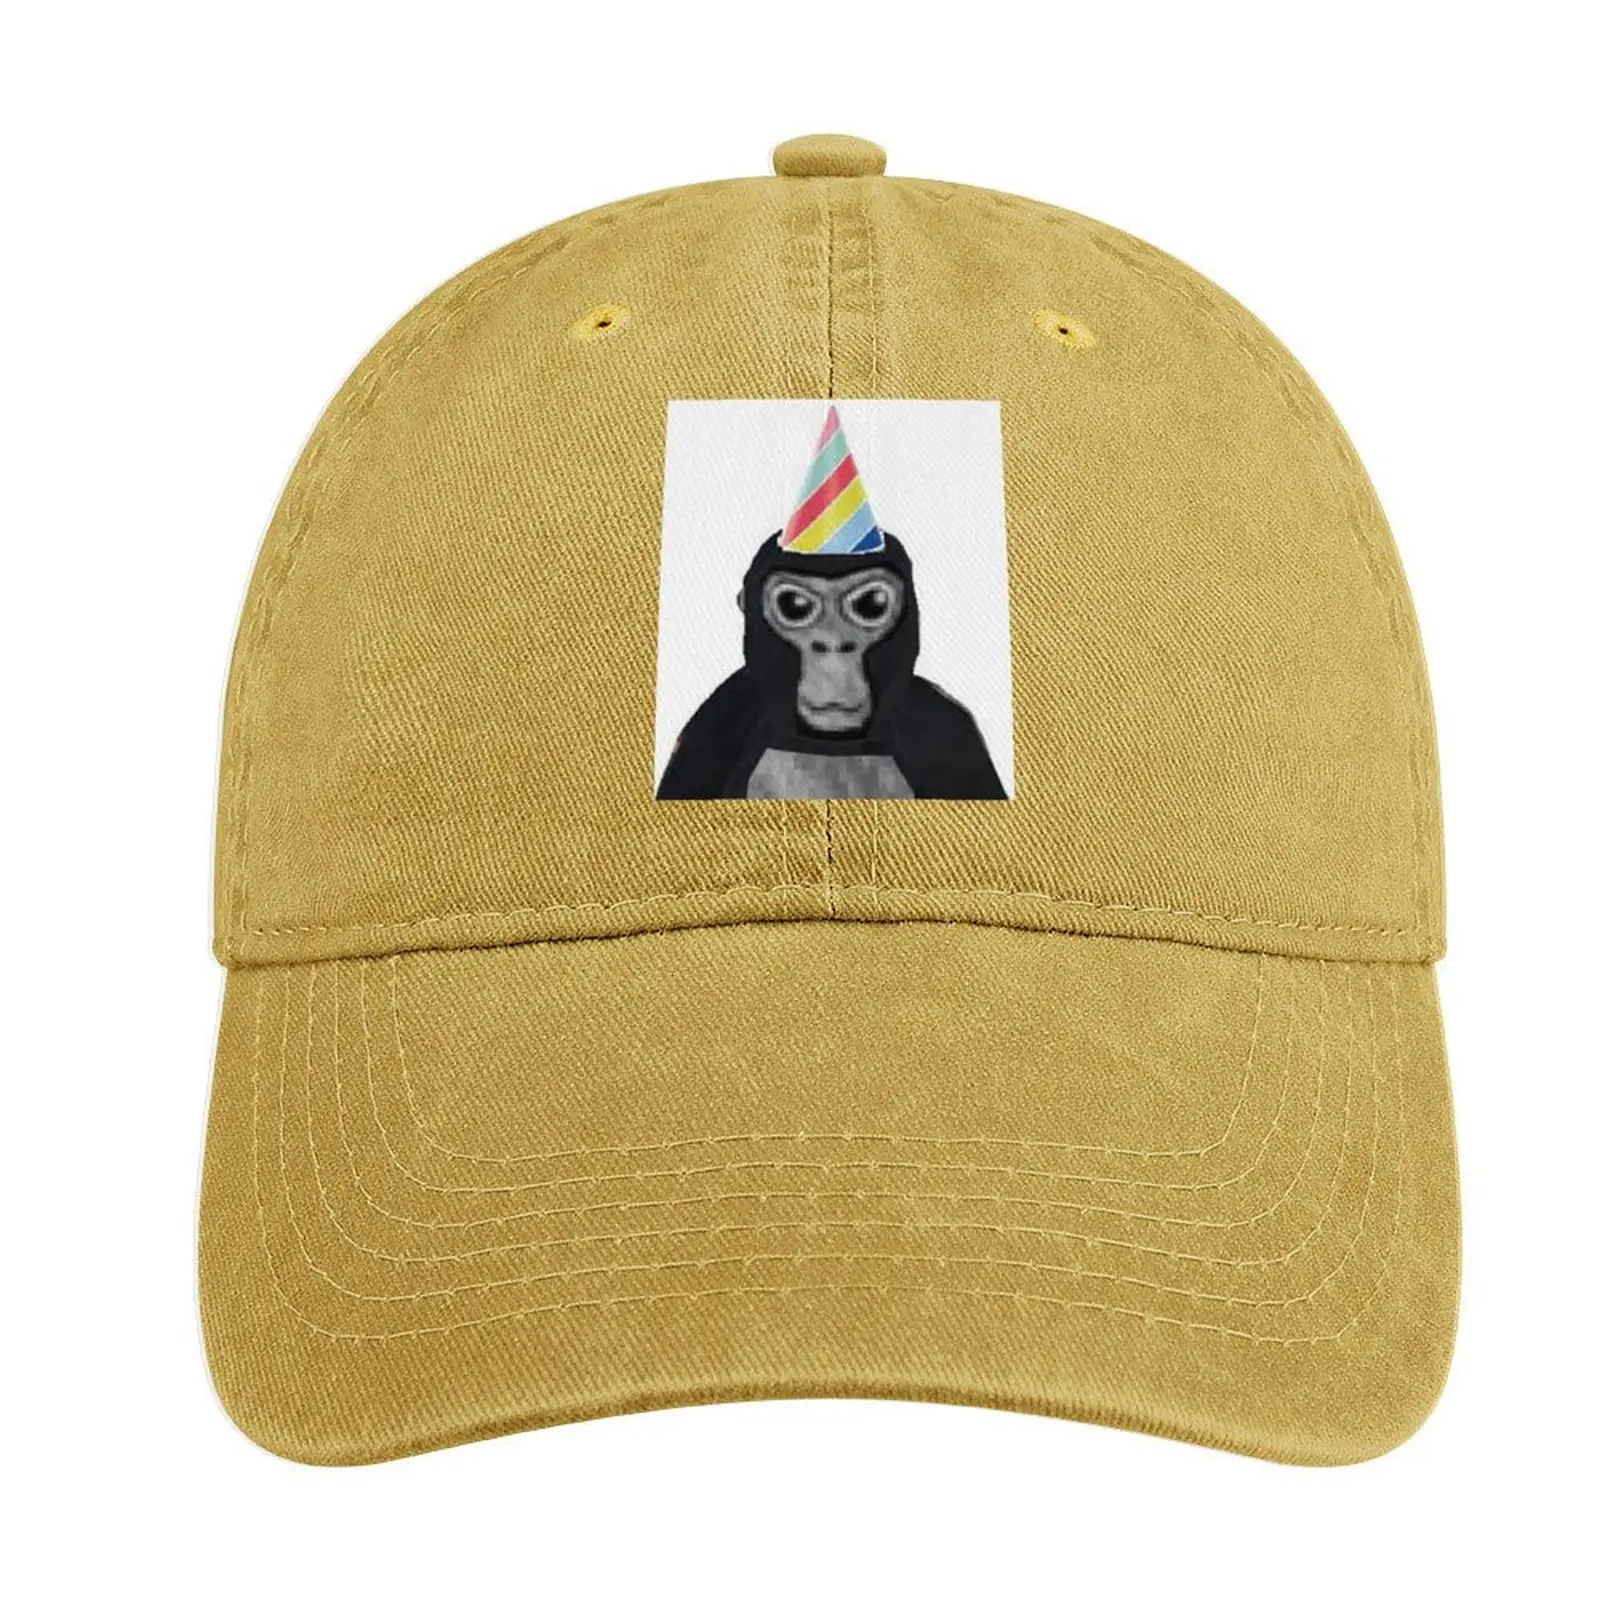 Gorilla Tag Monkey Banana Peel Gorilla Monke Gorilla Tag PFP Maker by  POLKART | Kids T-Shirt